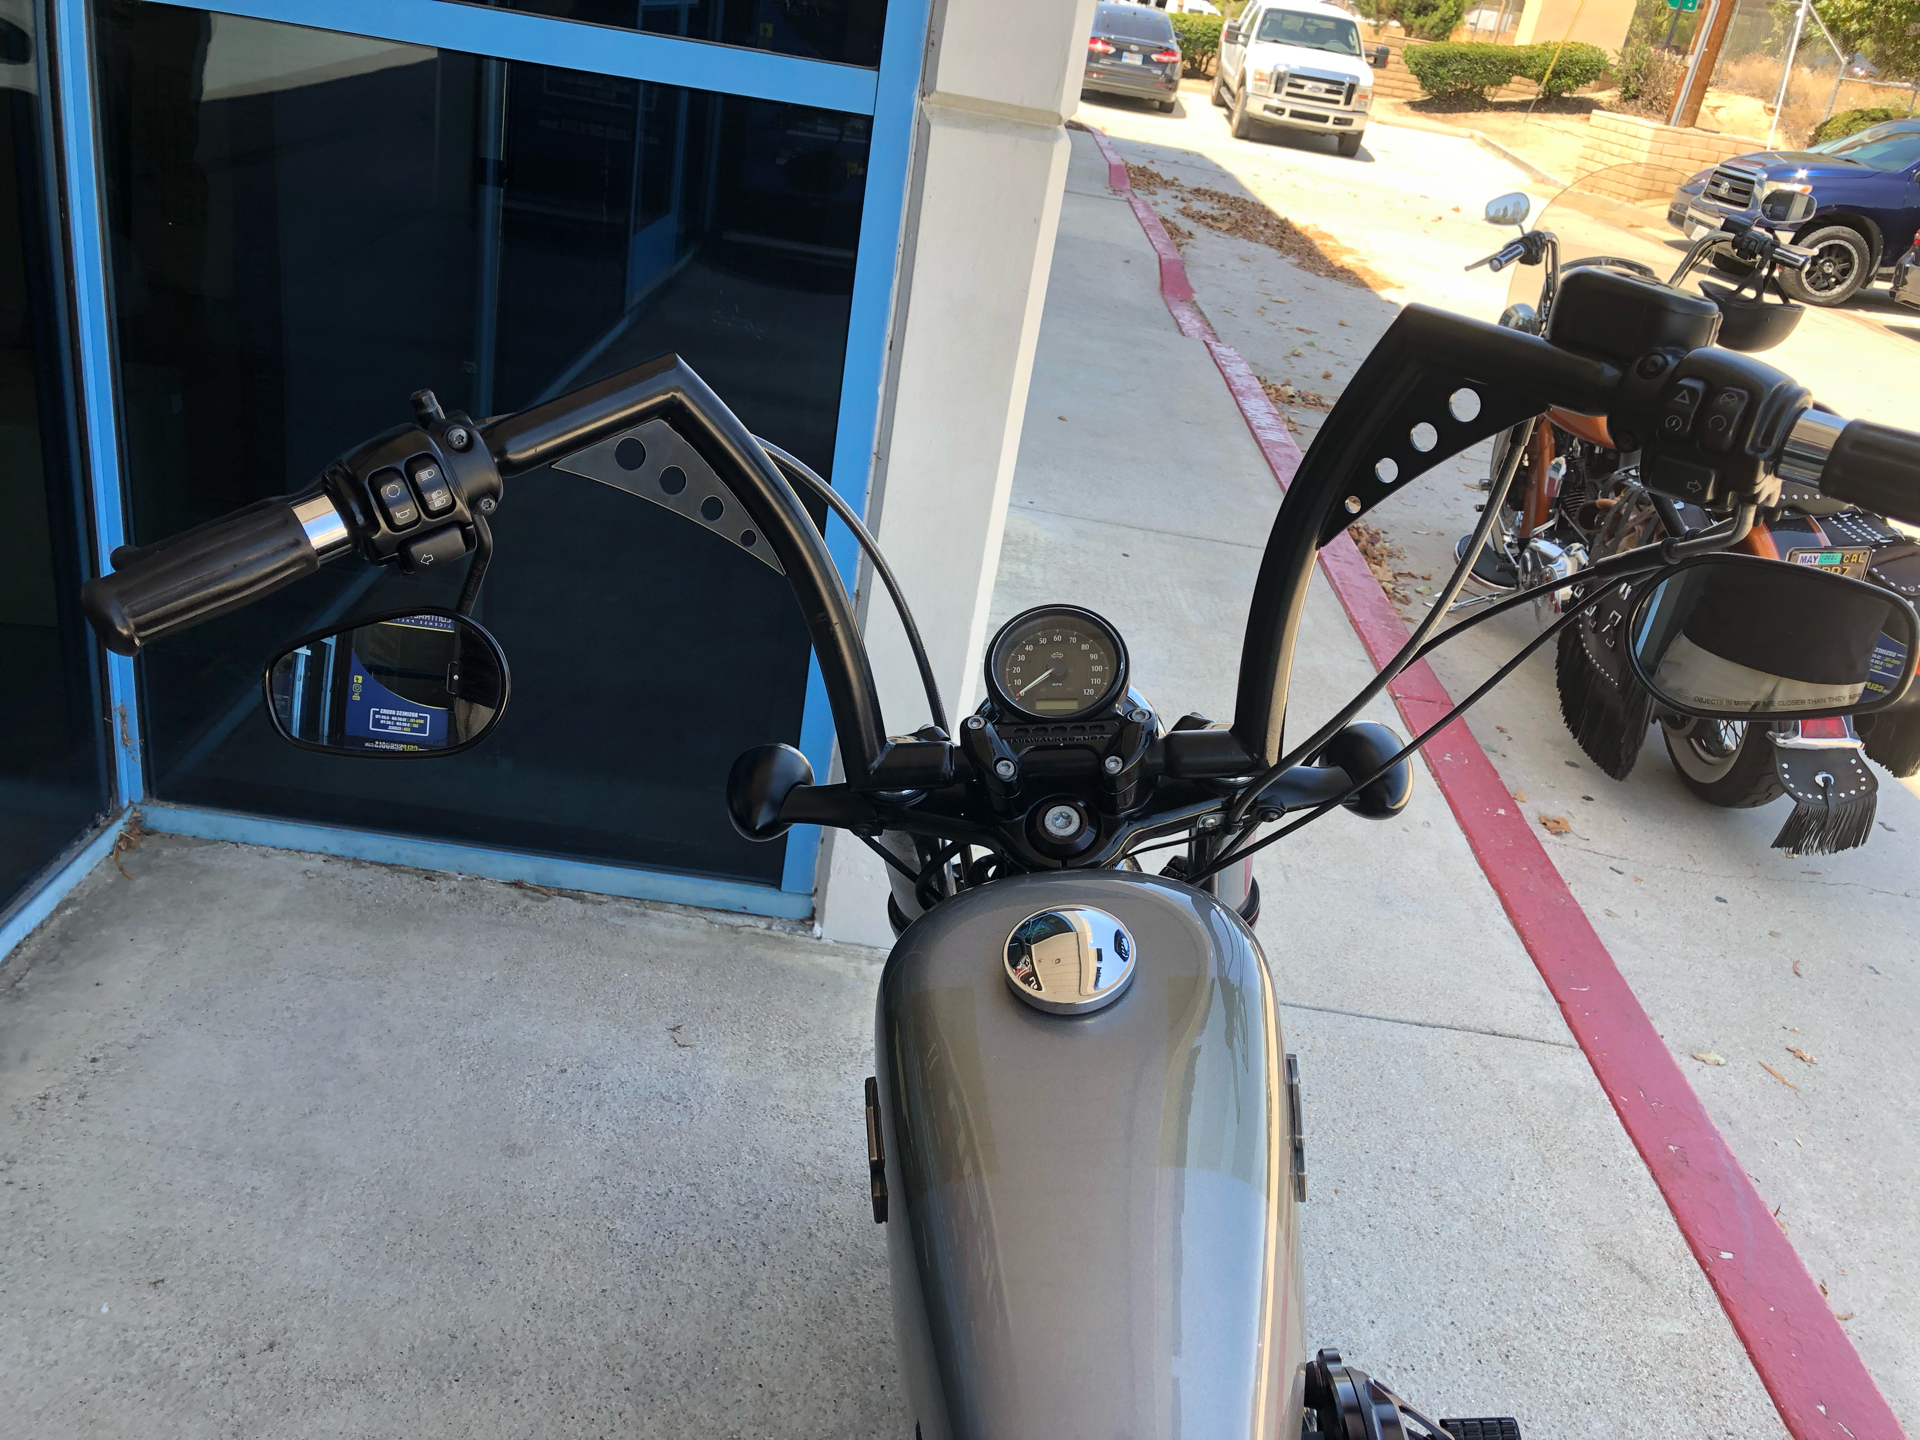 2016 Harley-Davidson Forty-Eight® in Temecula, California - Photo 10